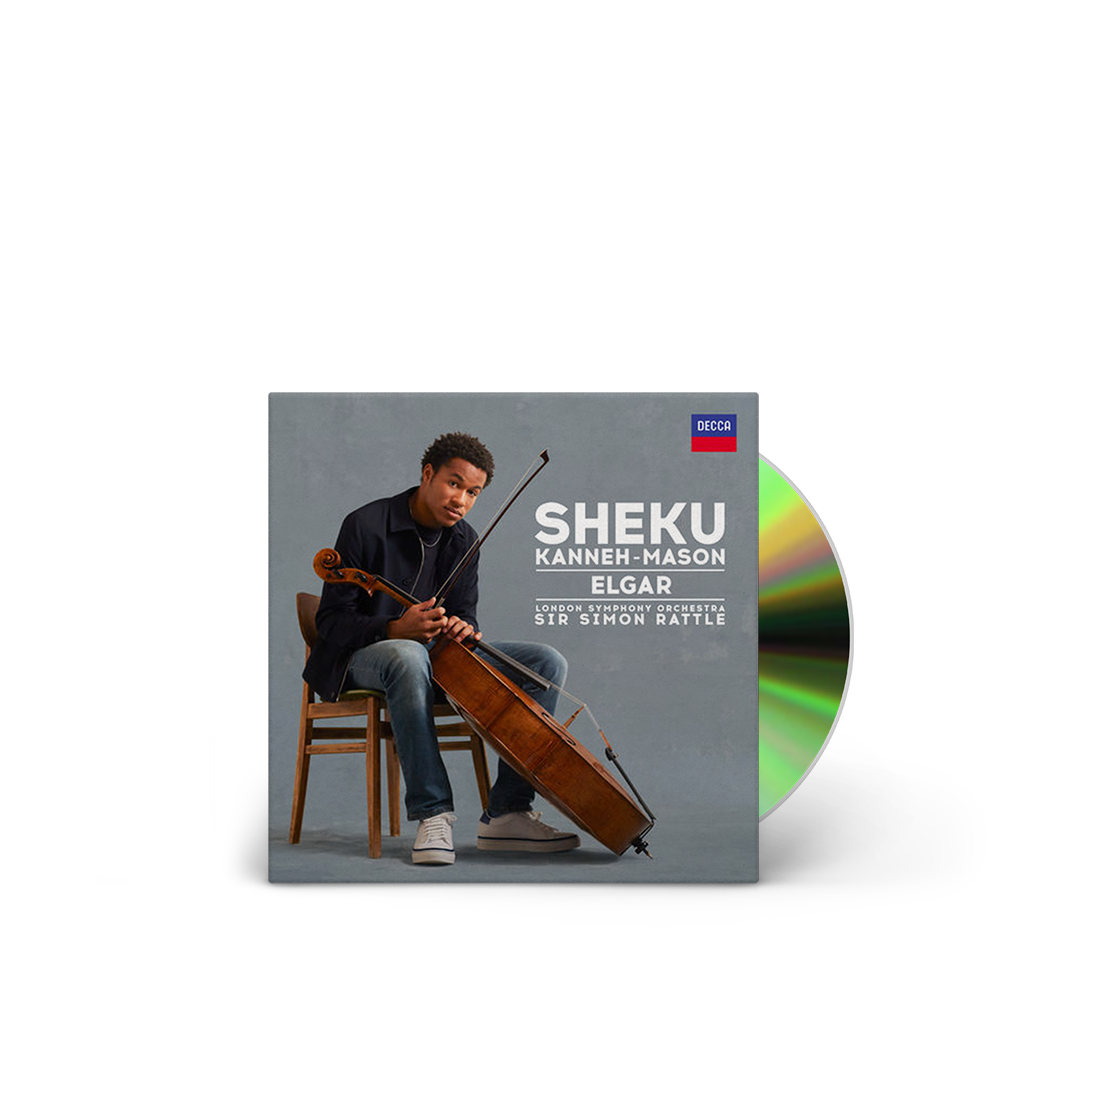 Sheku Kanneh-Mason - Elgar: CD